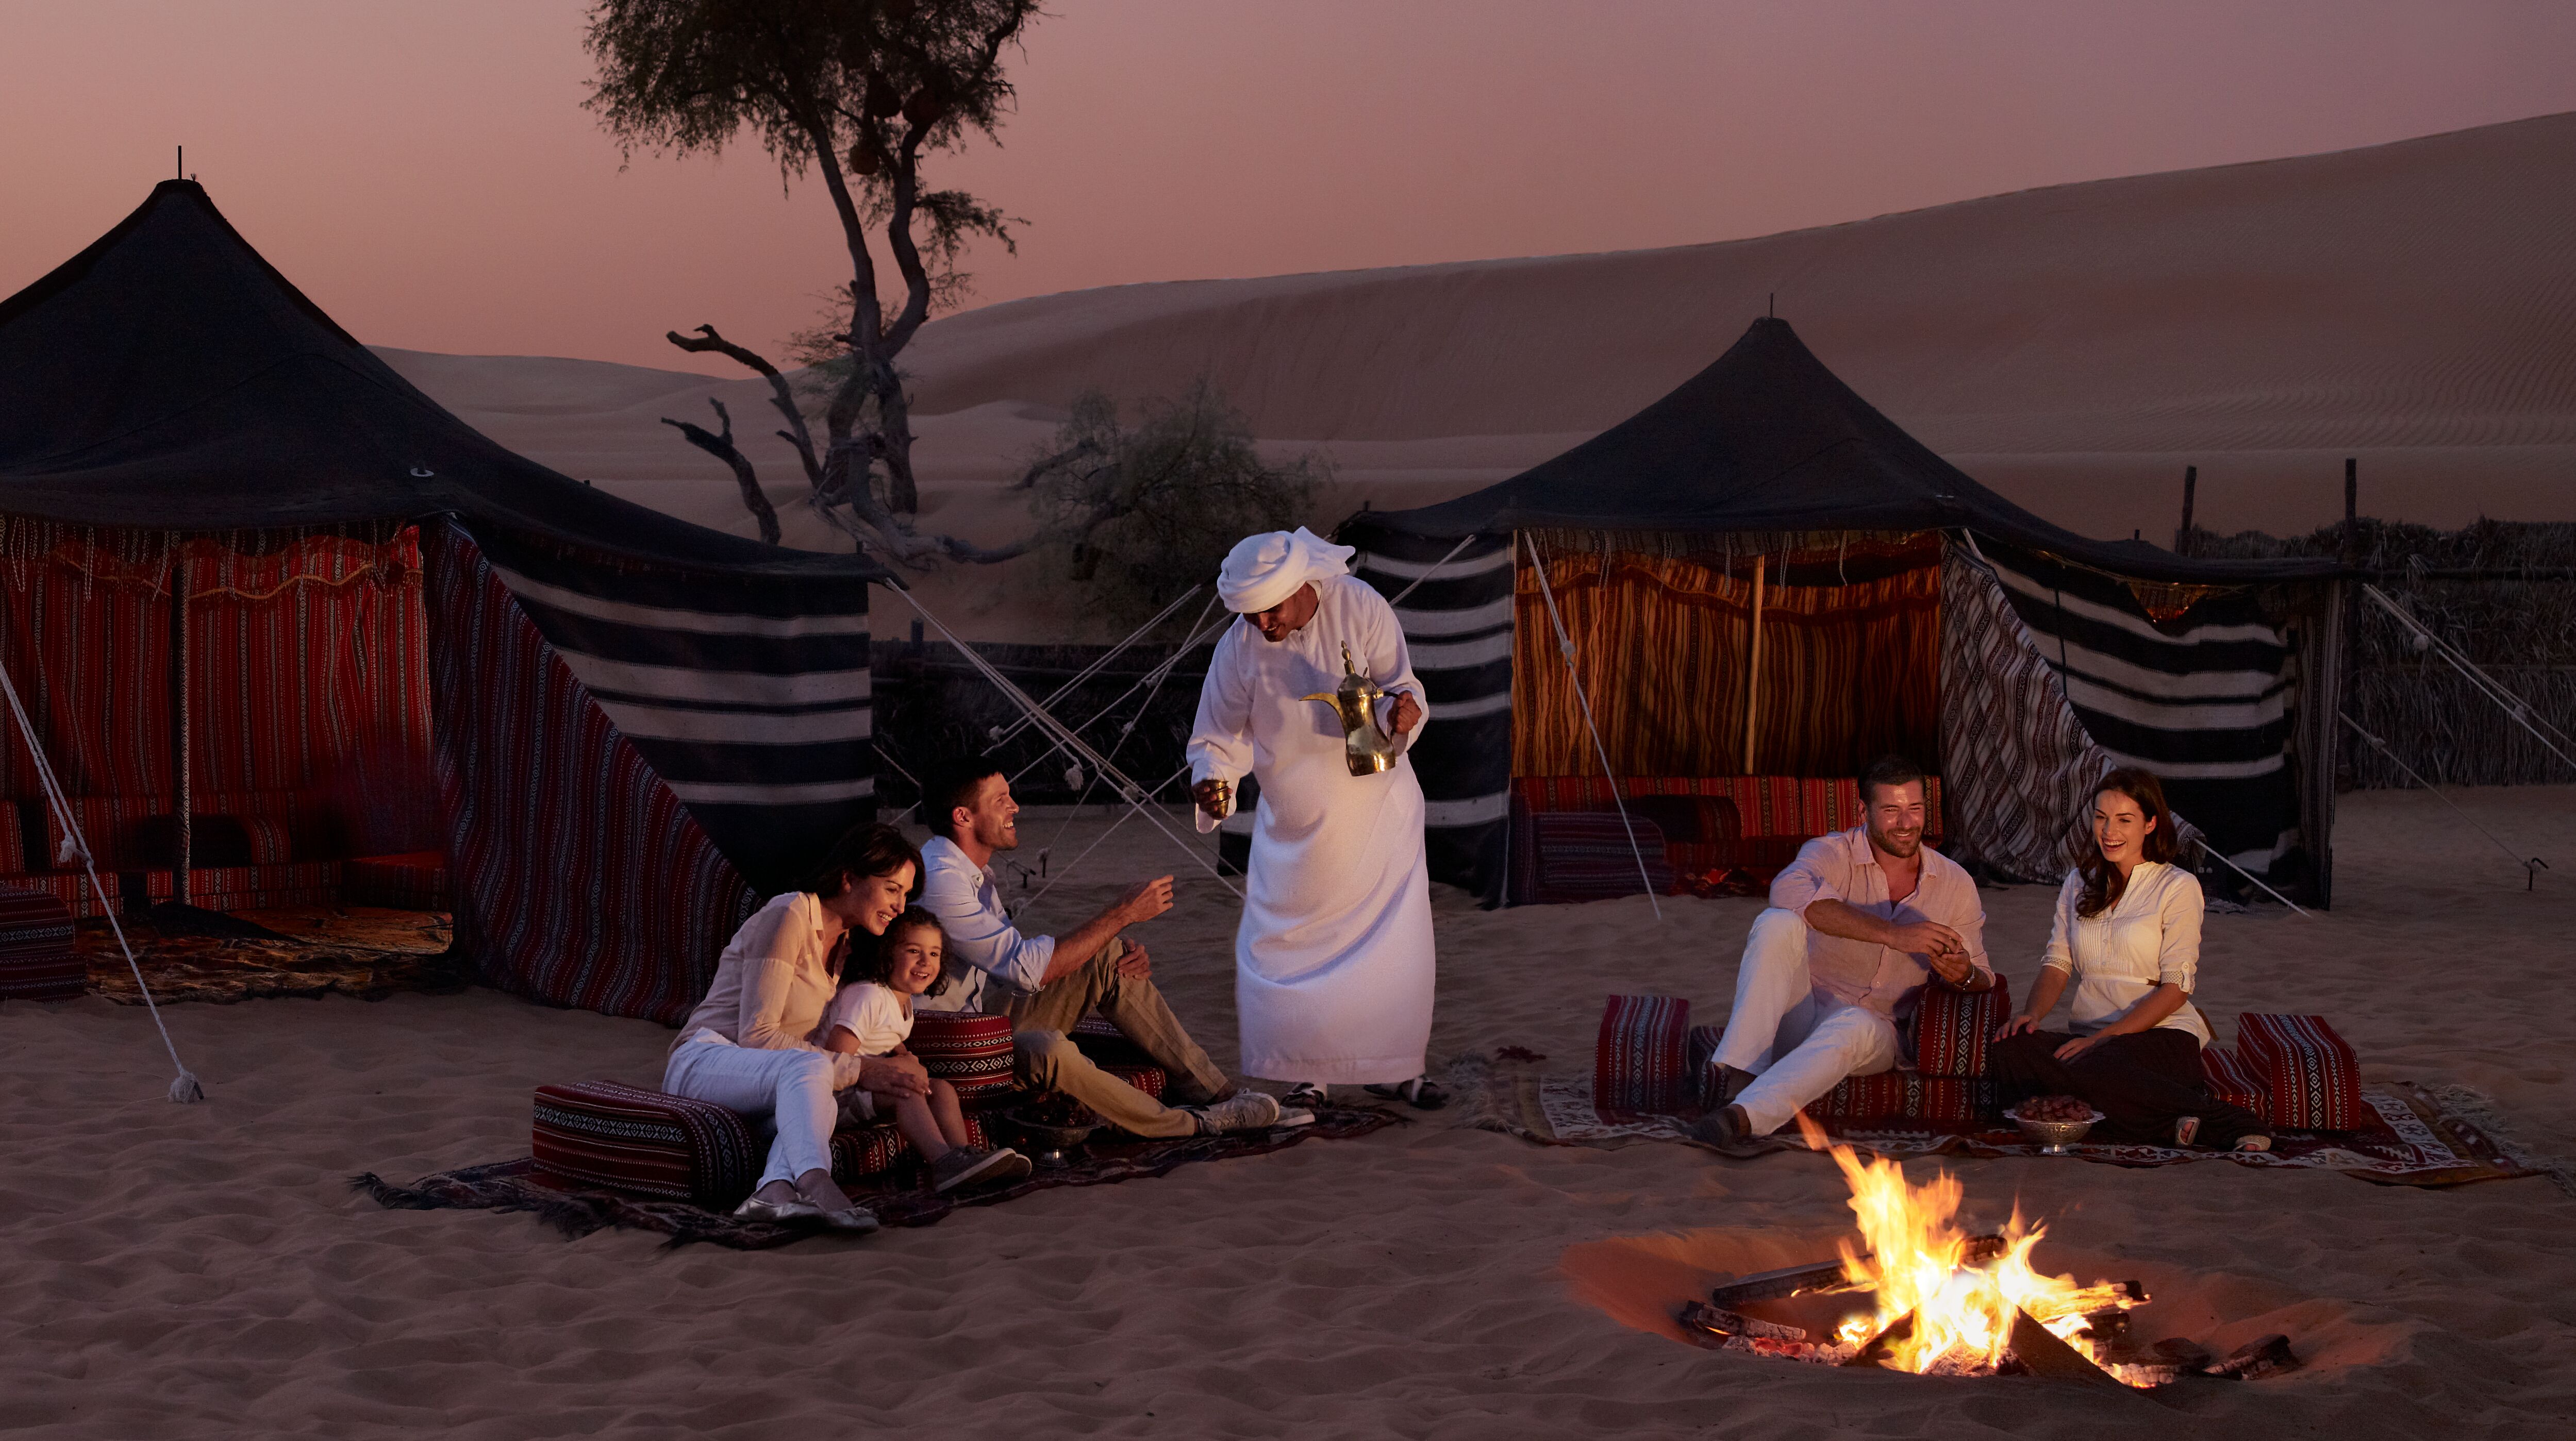 4. Arabian Nights Village